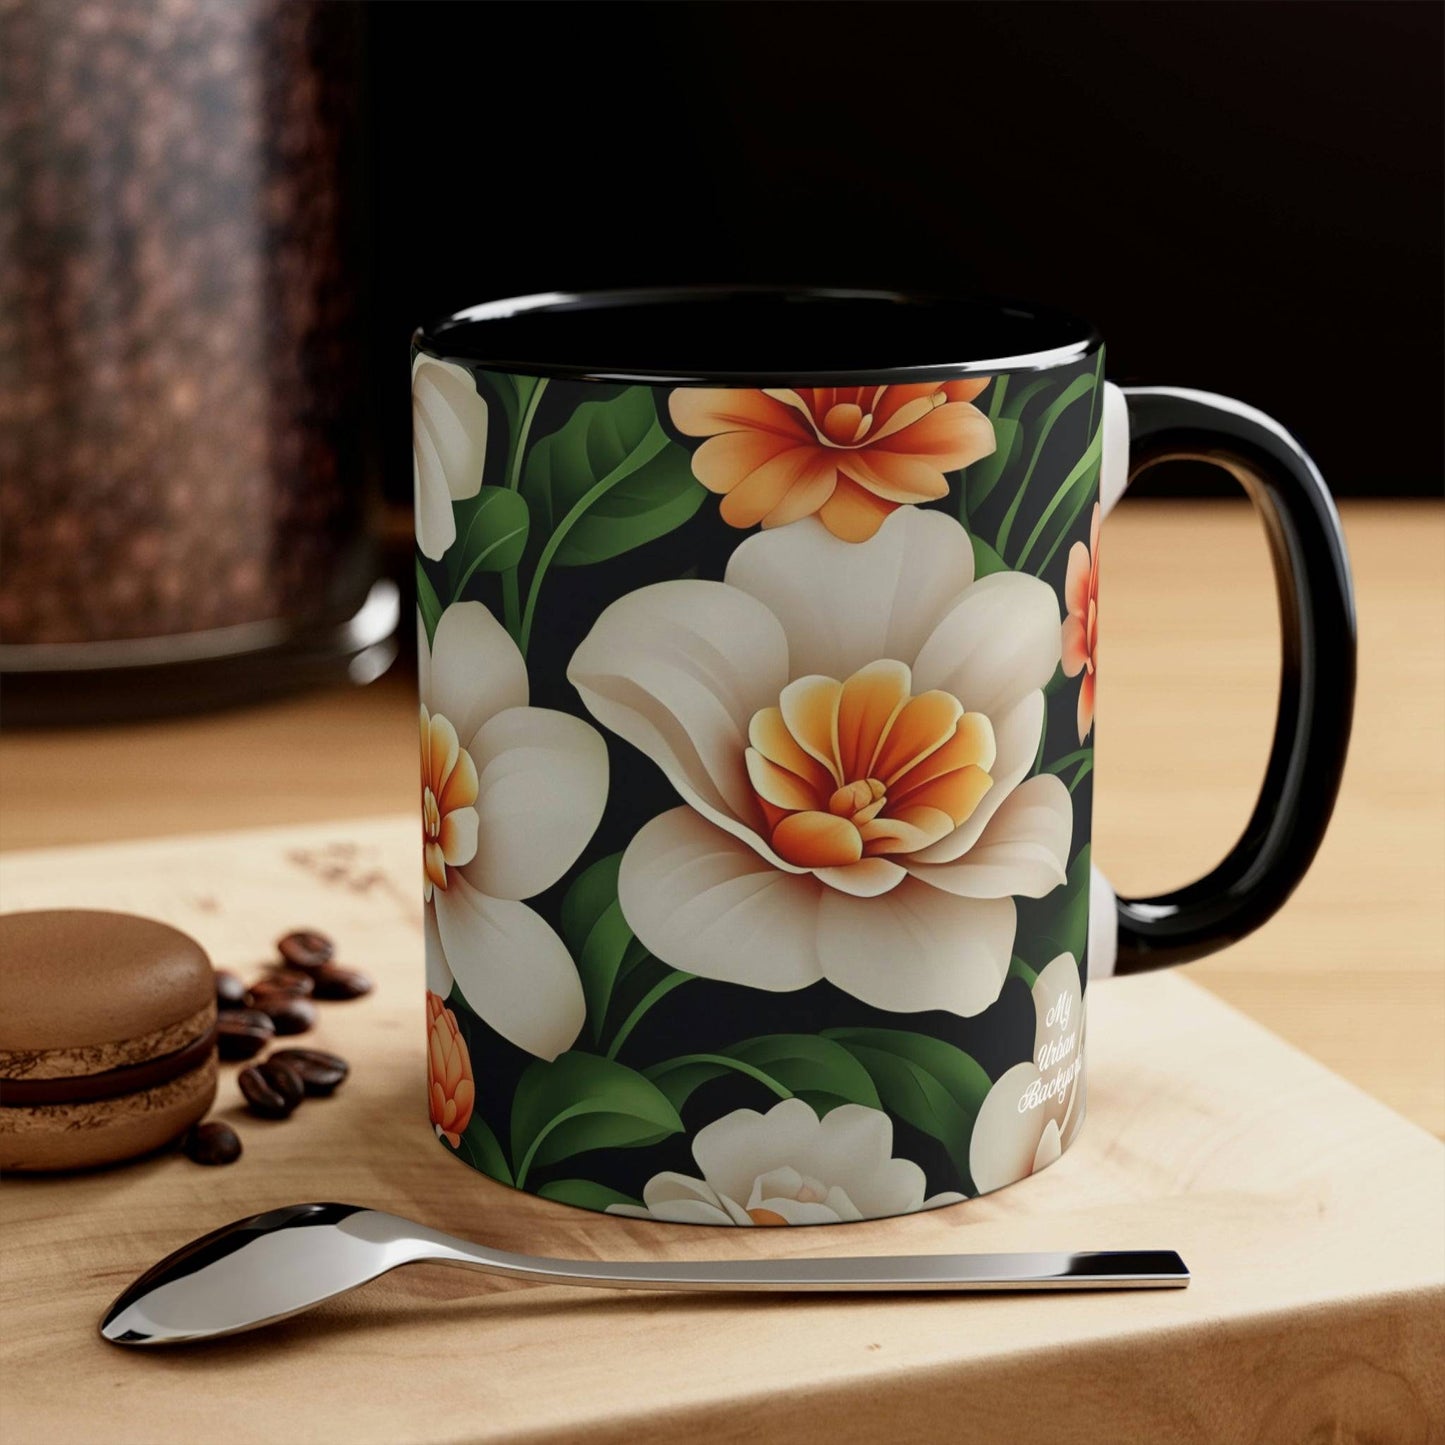 Ceramic Mug for Coffee, Tea, Hot Cocoa. Home/Office, White Flowers